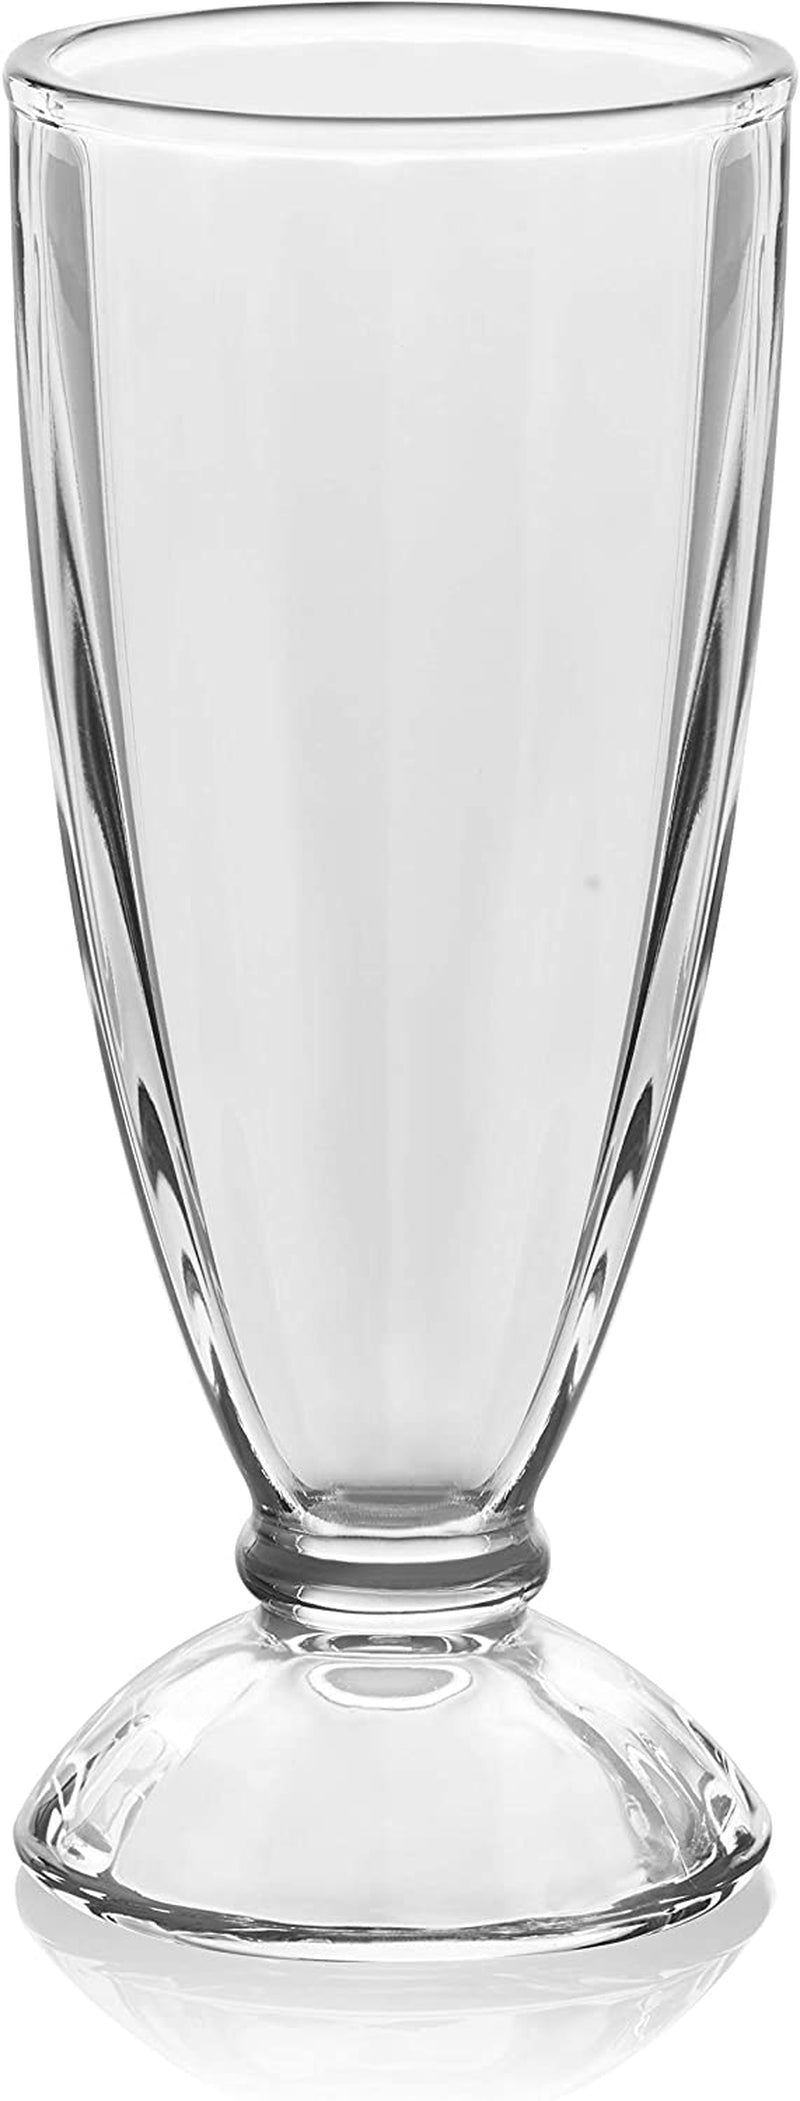 Libbey Fountain Shoppe Milkshake Glasses, 12-Ounce, Set of 6 Home & Garden > Kitchen & Dining > Tableware > Drinkware Libbey   